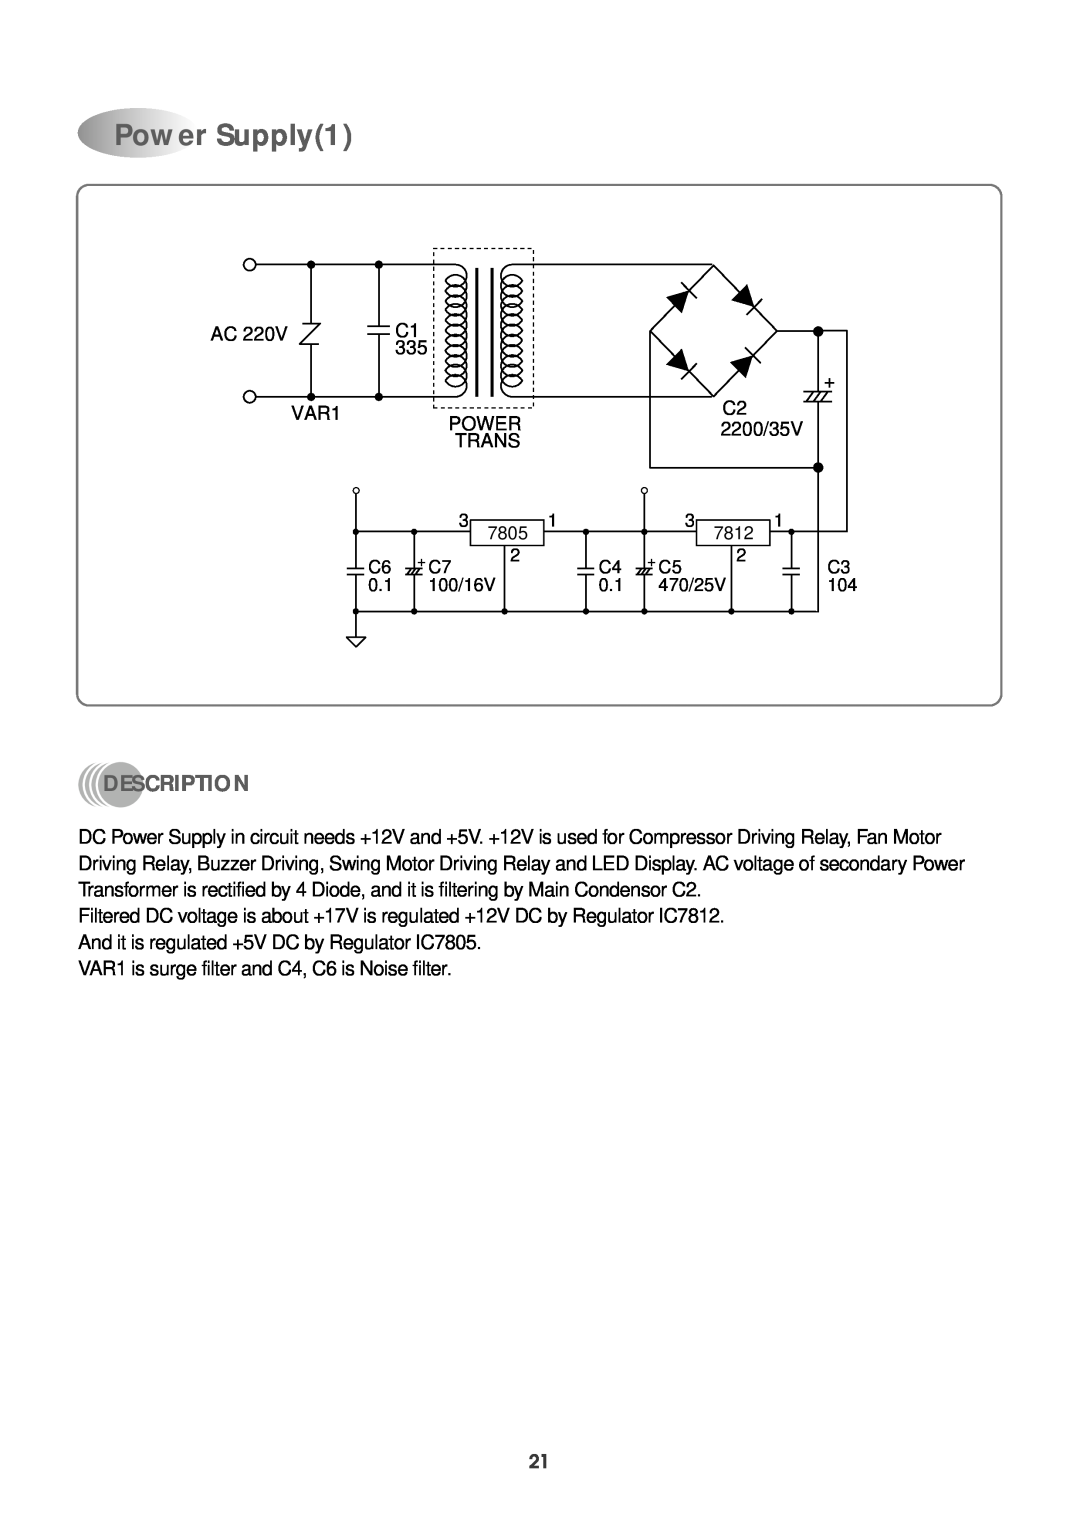 Daewoo DWC-121R service manual Power Supply1, Description 